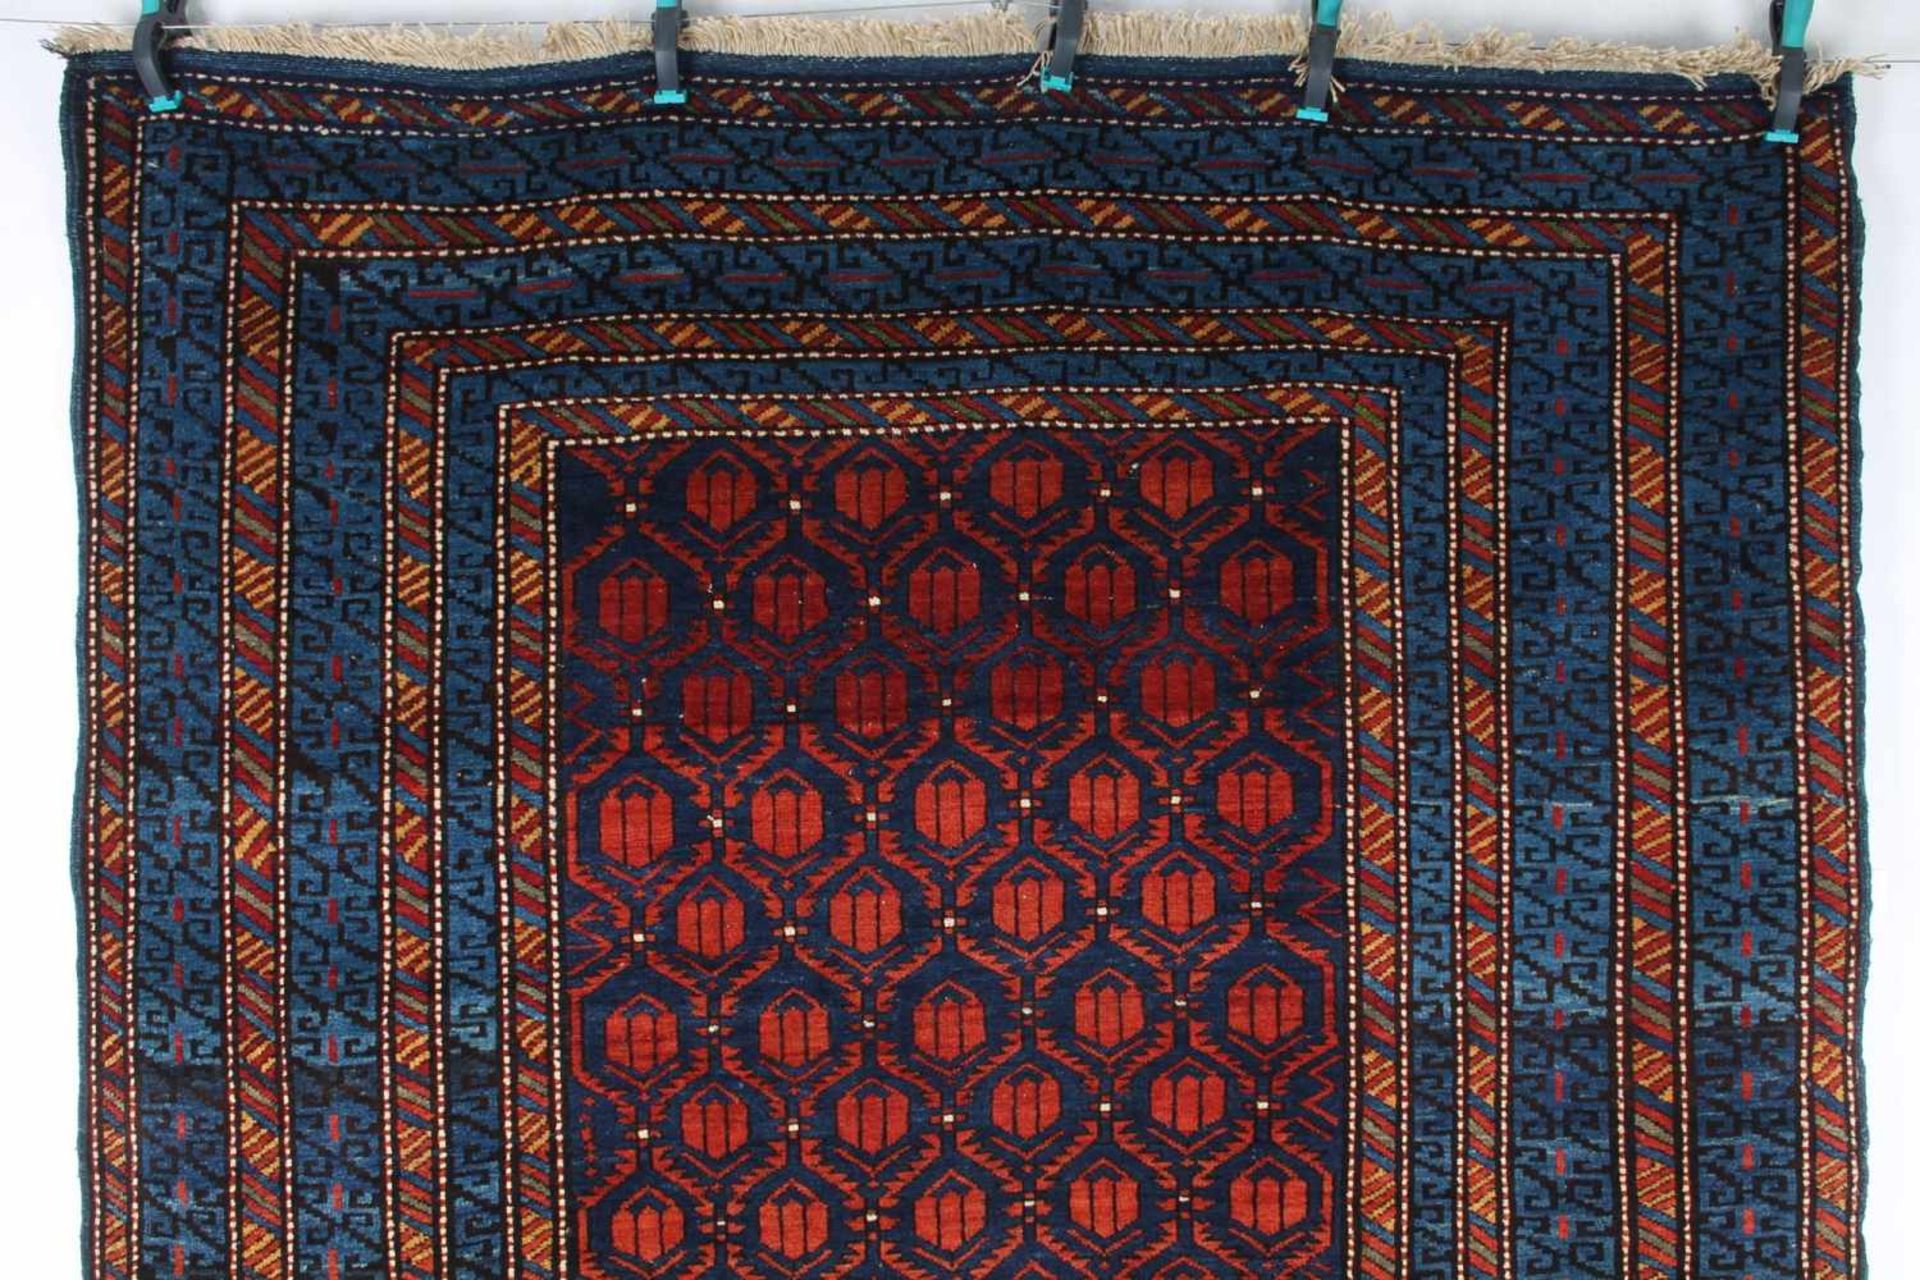 Antiker Tschi - Tschi Kaukasus Teppich, antique kazak carpet, - Bild 2 aus 9